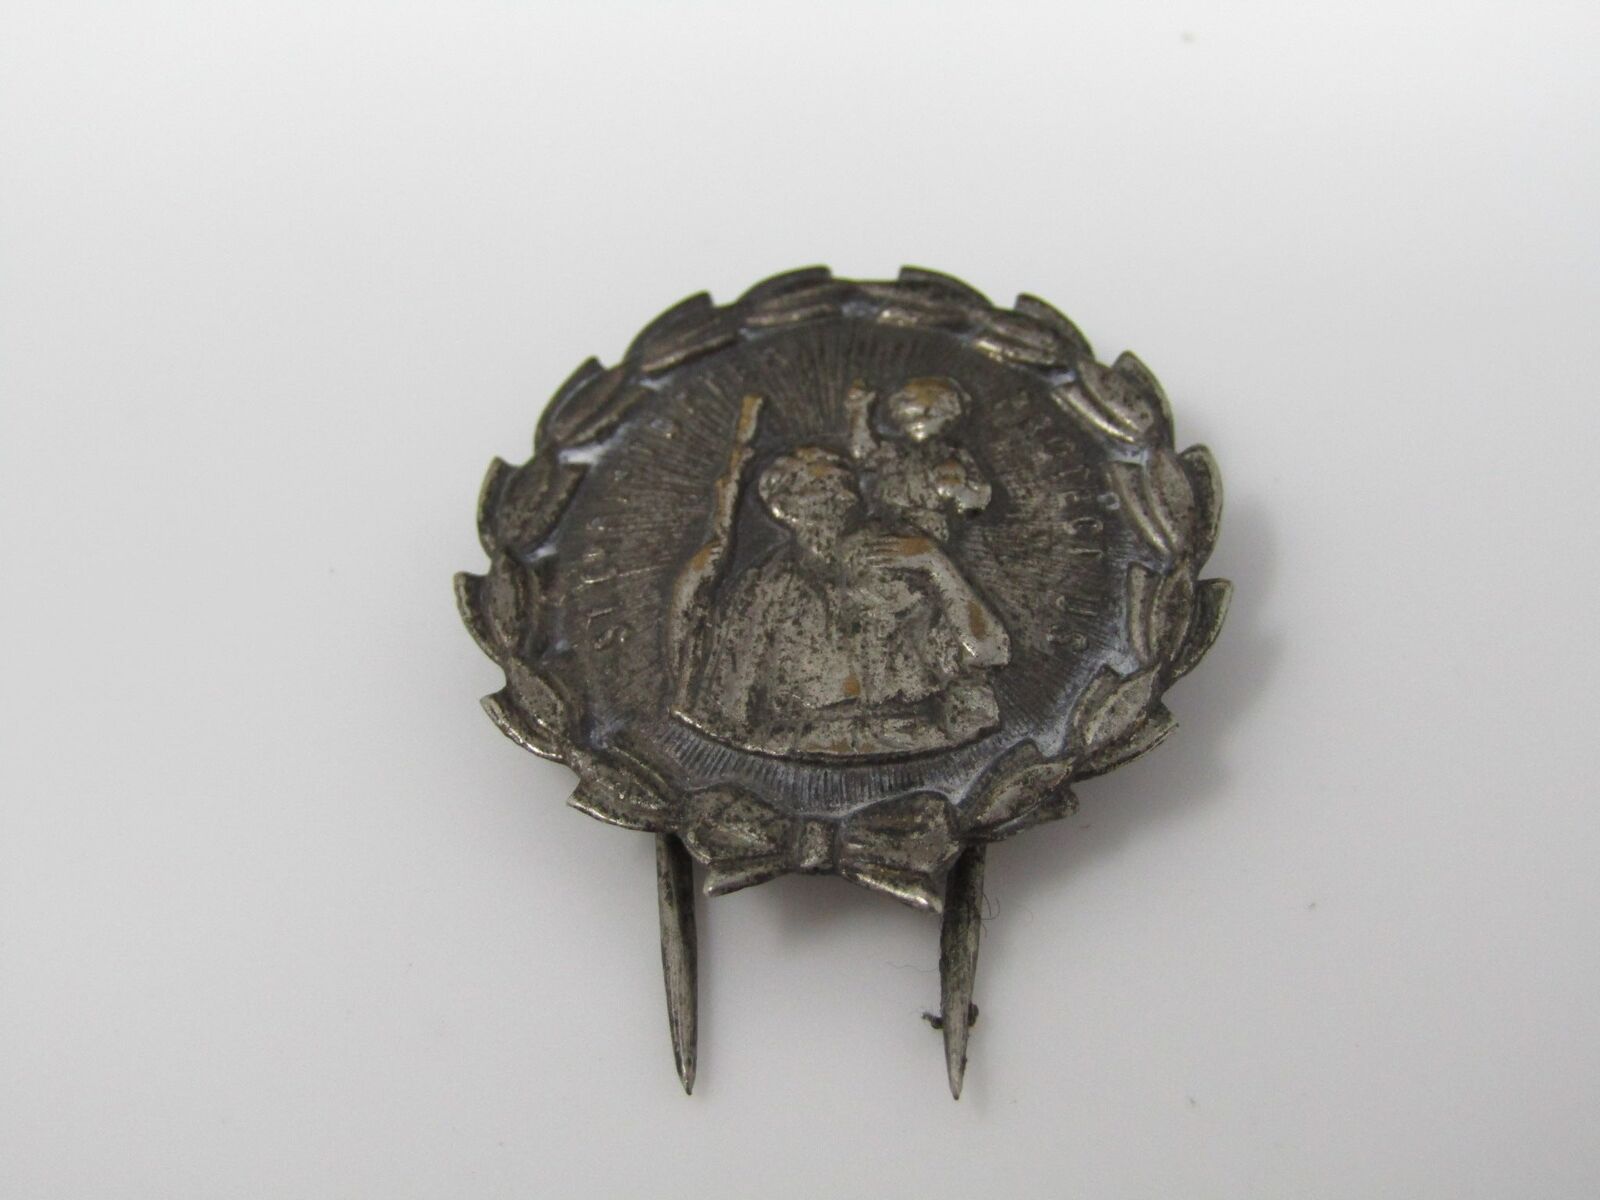 Vintage Christian Pin: St. Christopher Amazing Design